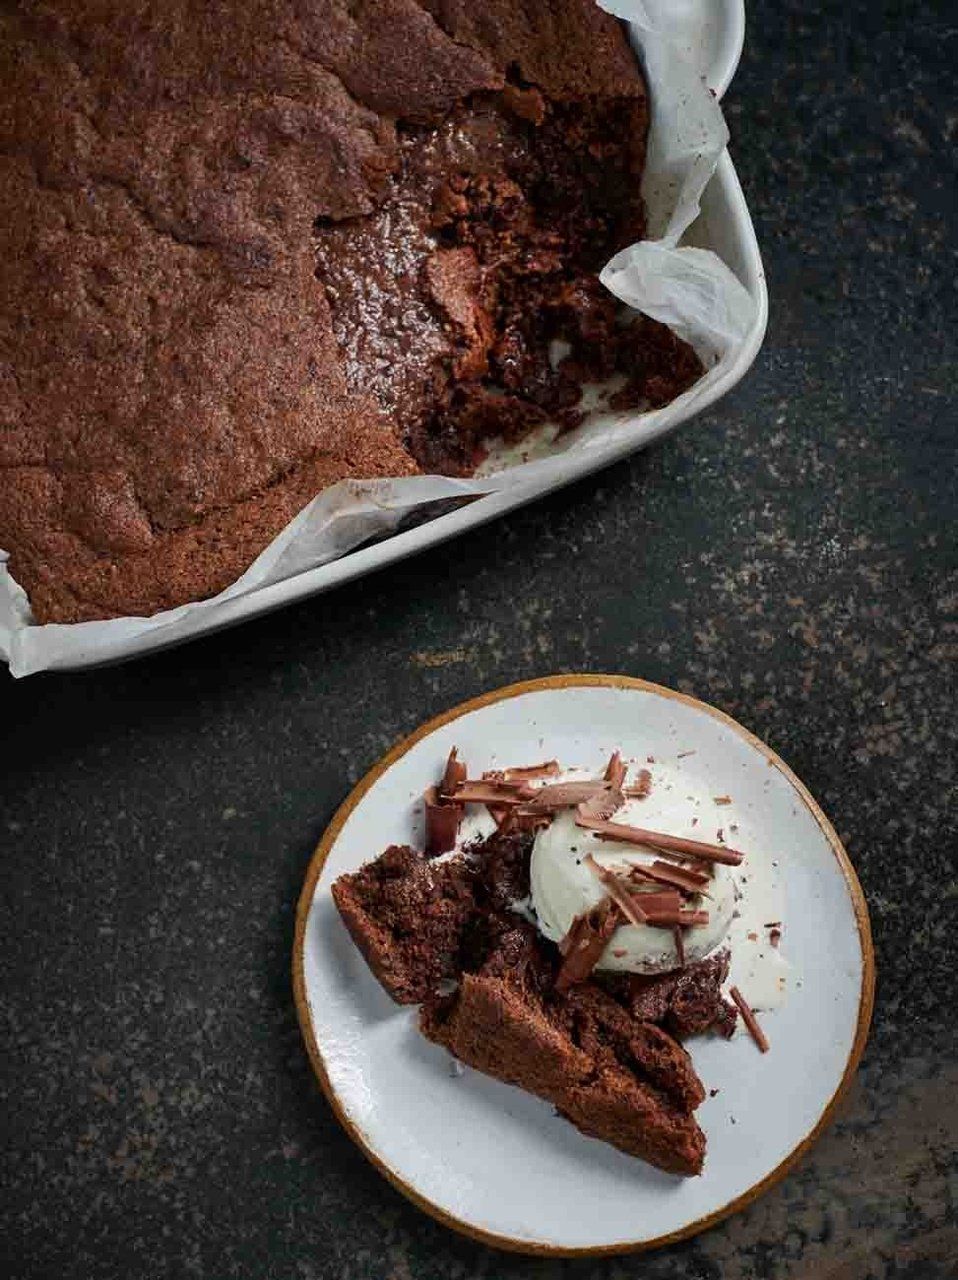 mug cake recipe in cooker 3 ways | eggless chocolate mug cake in kadai